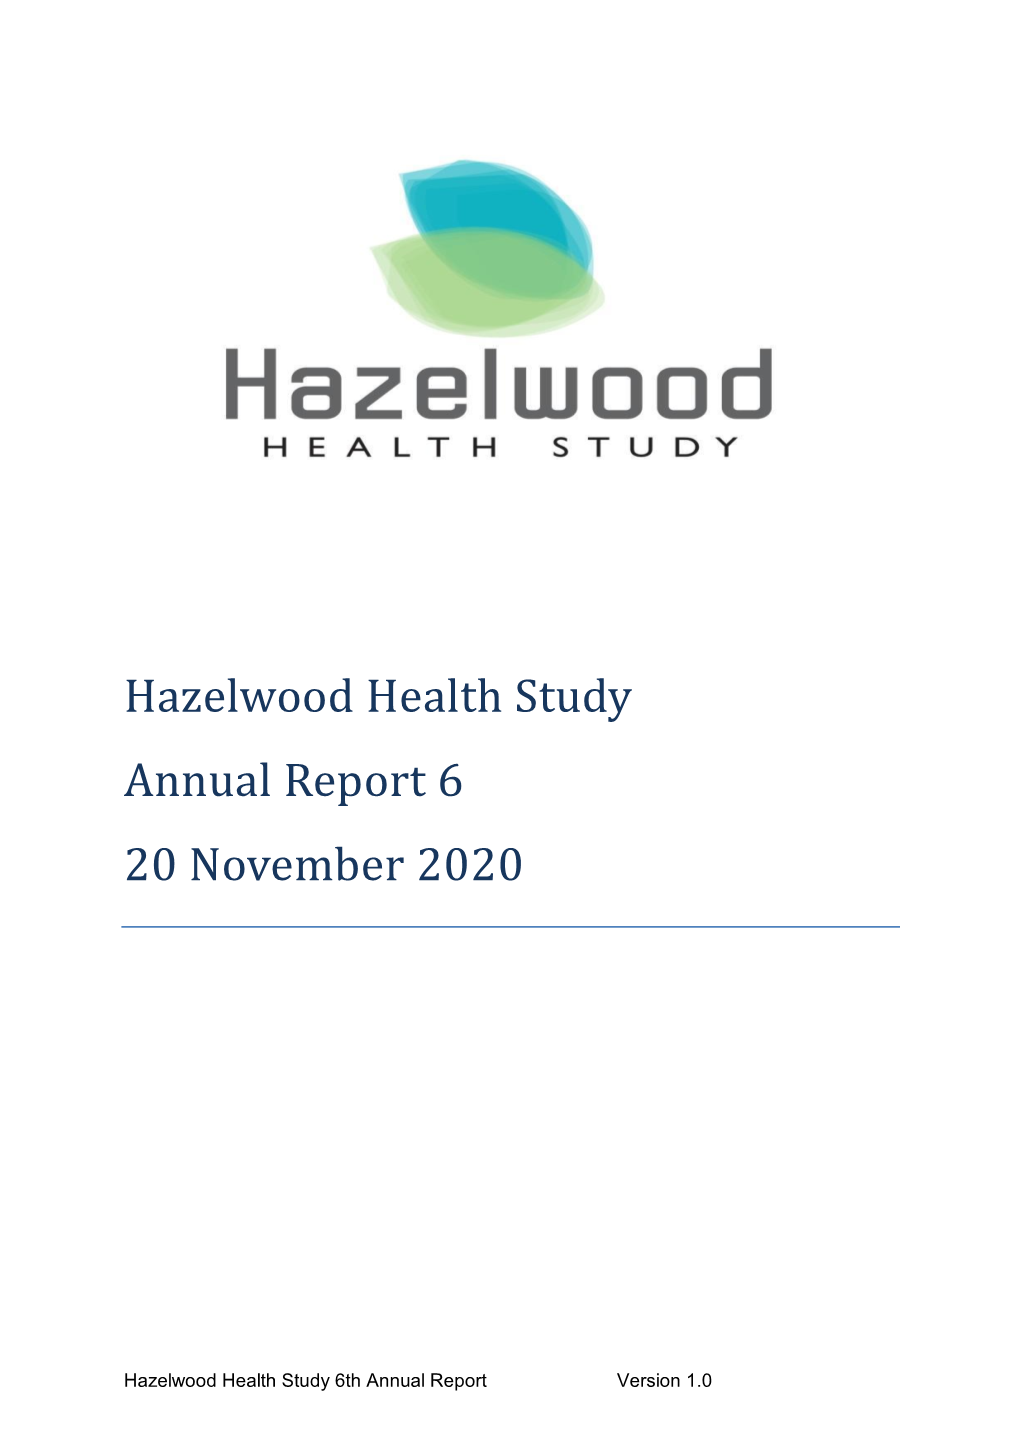 Hazelwood Health Study Annual Report 6 20 November 2020